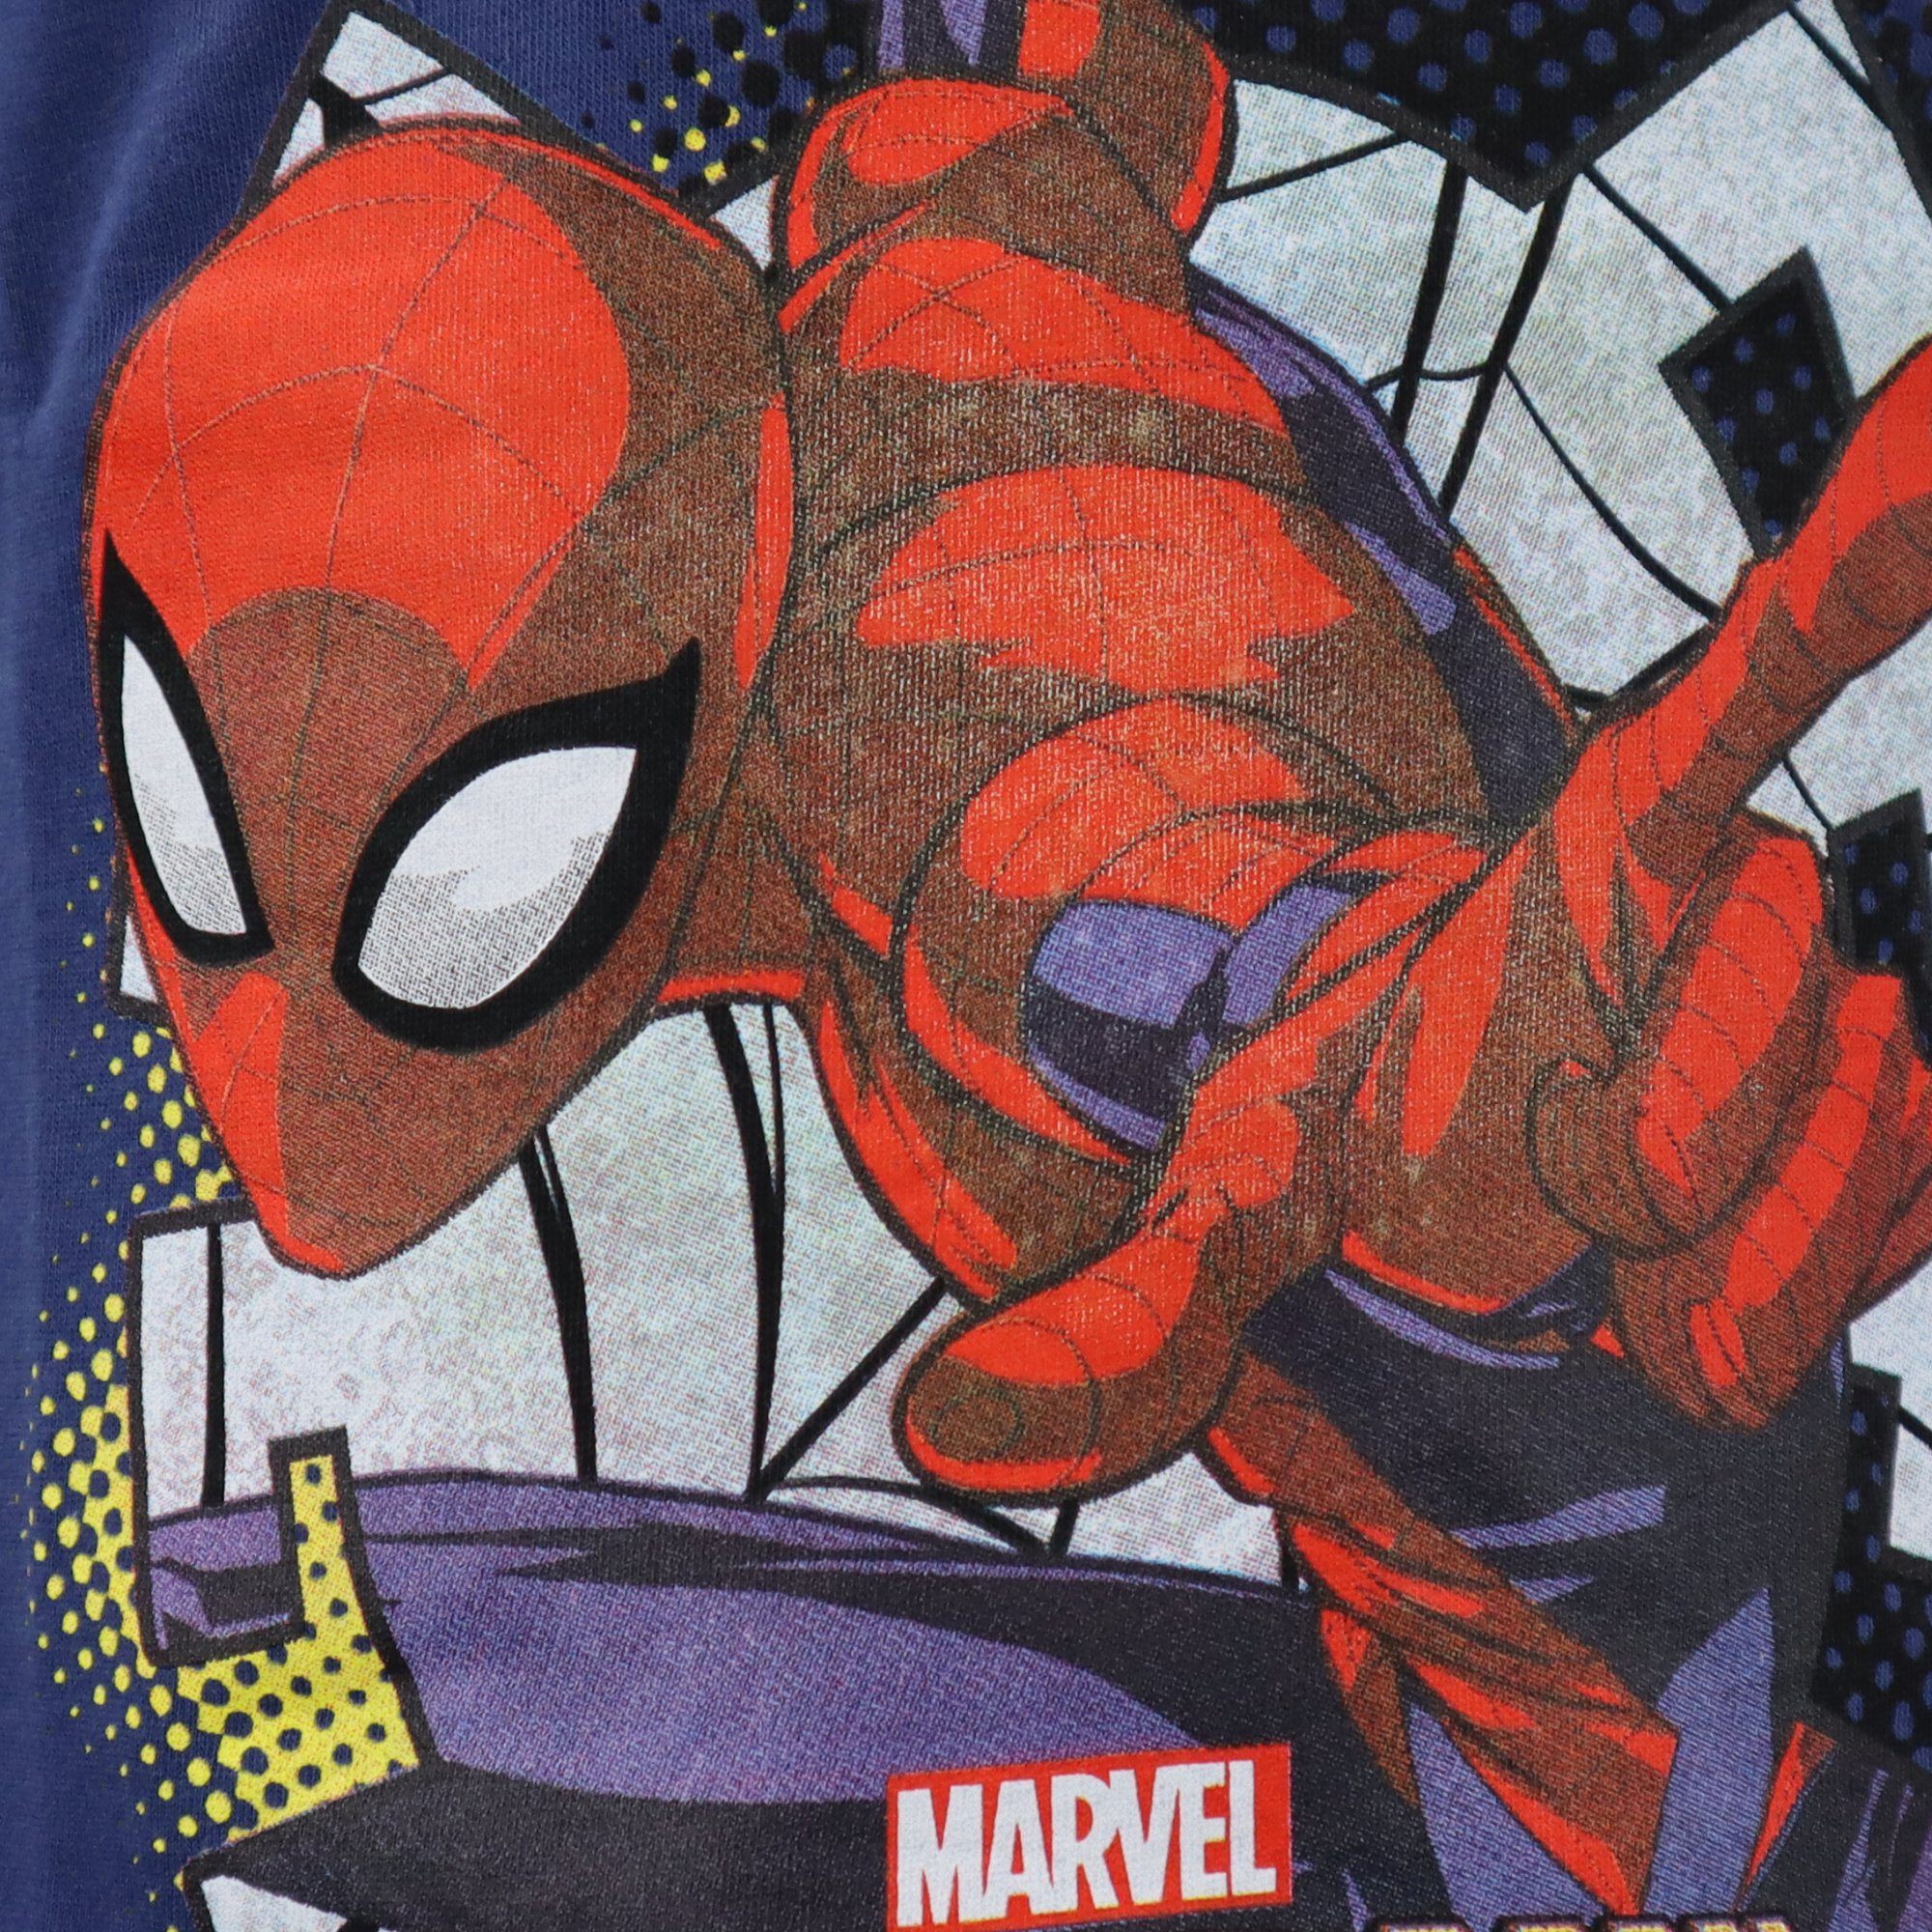 Gr. Baumwolle 98 MARVEL Spiderman Print-Shirt 100% bis Shirt kurzarm T-Shirt Jungen Kinder 128, Dunkelblau